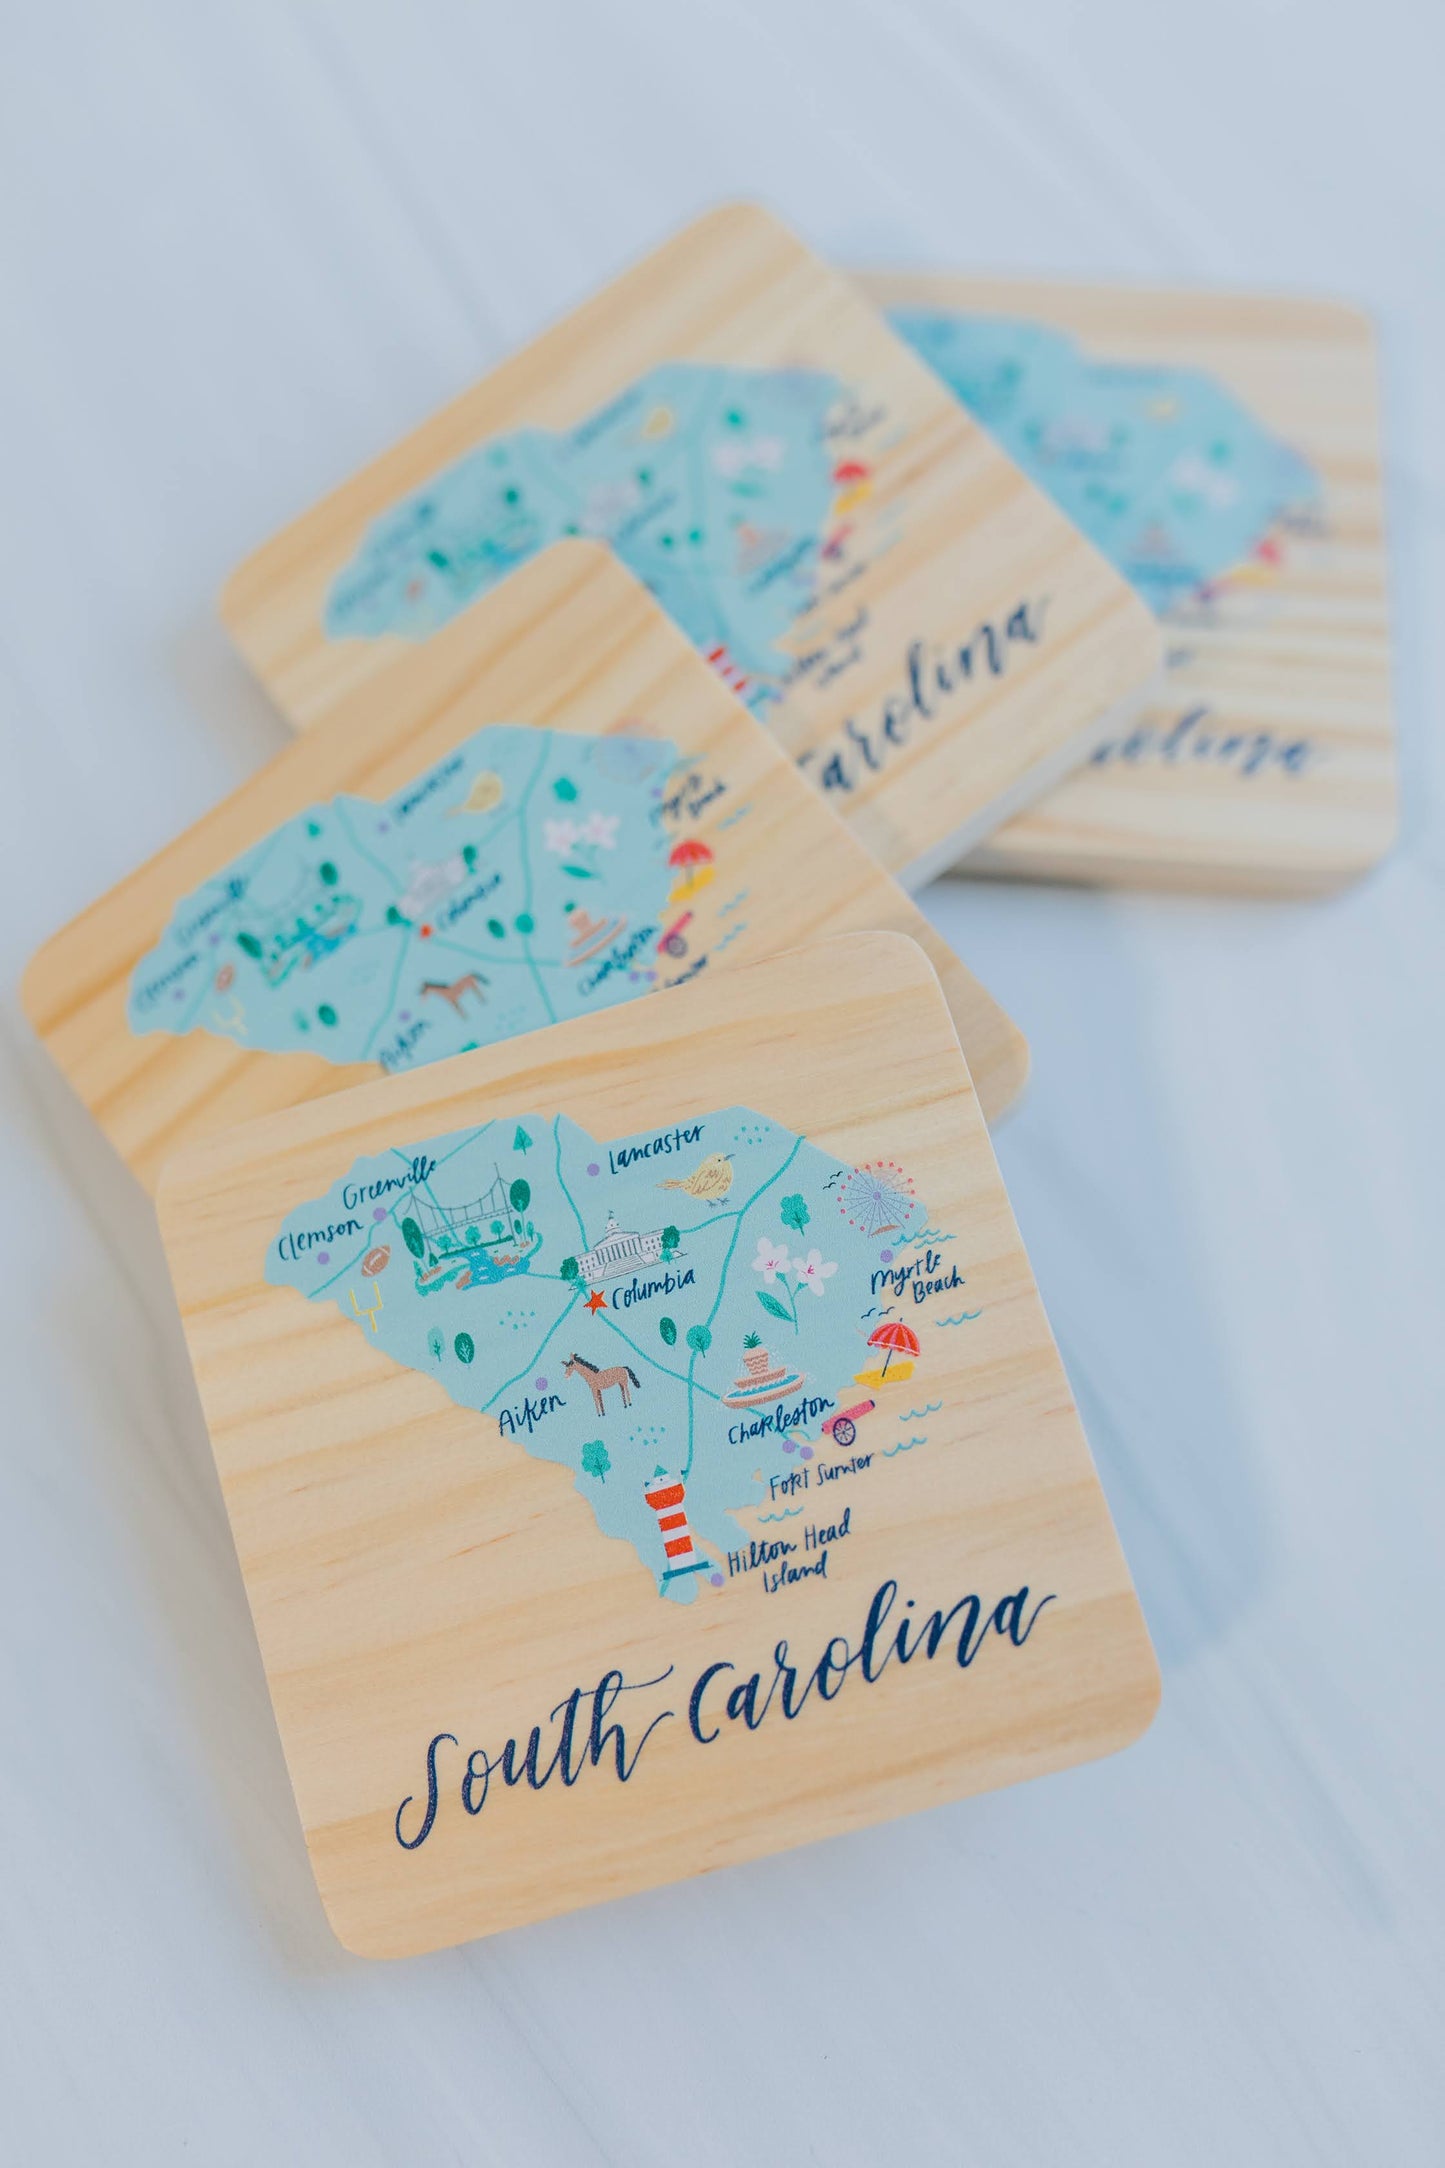 South Carolina Set of 4 Wooden Coasters